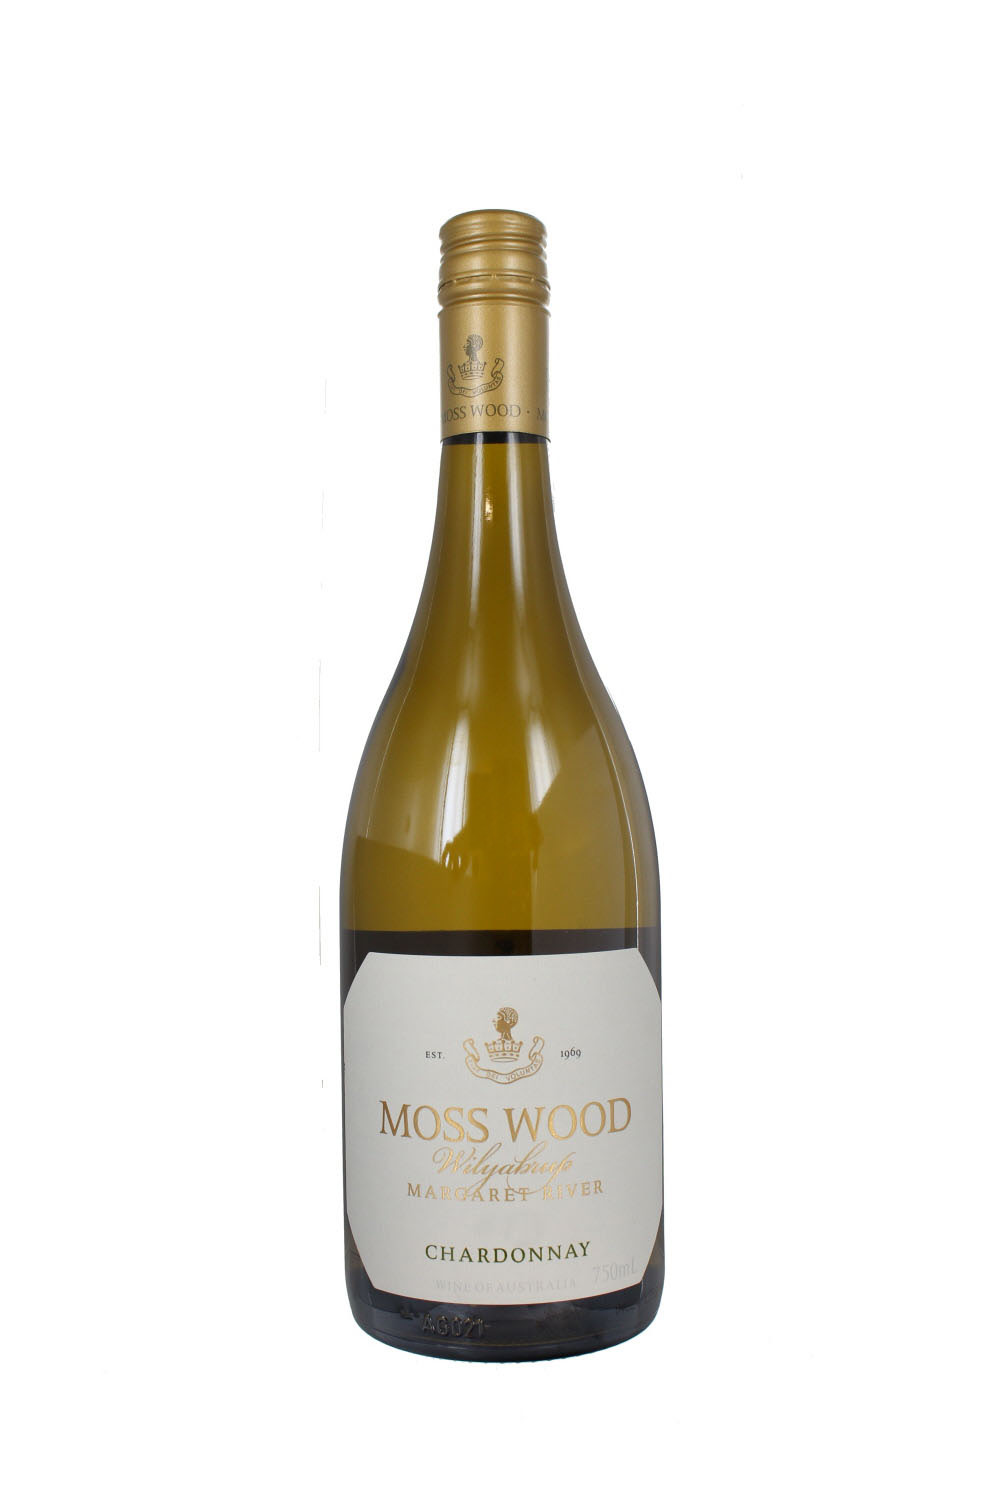 2016 Moss Wood Chardonnay, Margaret River, Western Australia (Case)